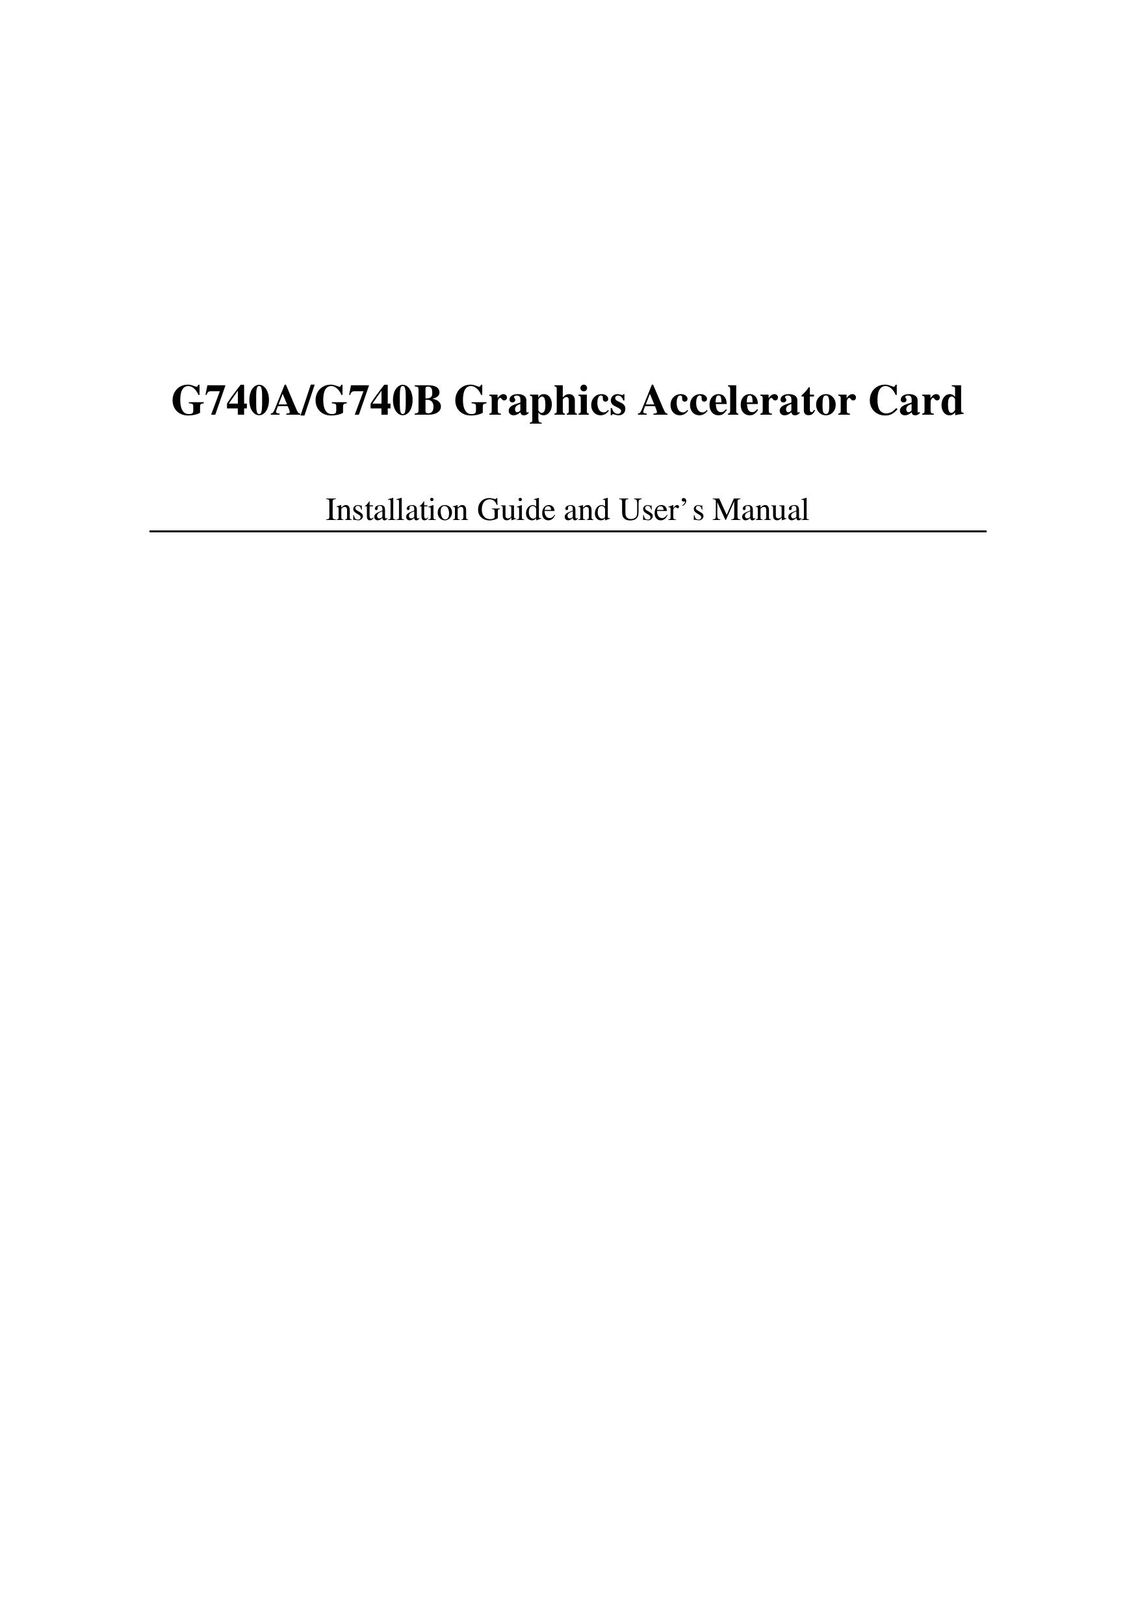 Abit G740A Computer Hardware User Manual